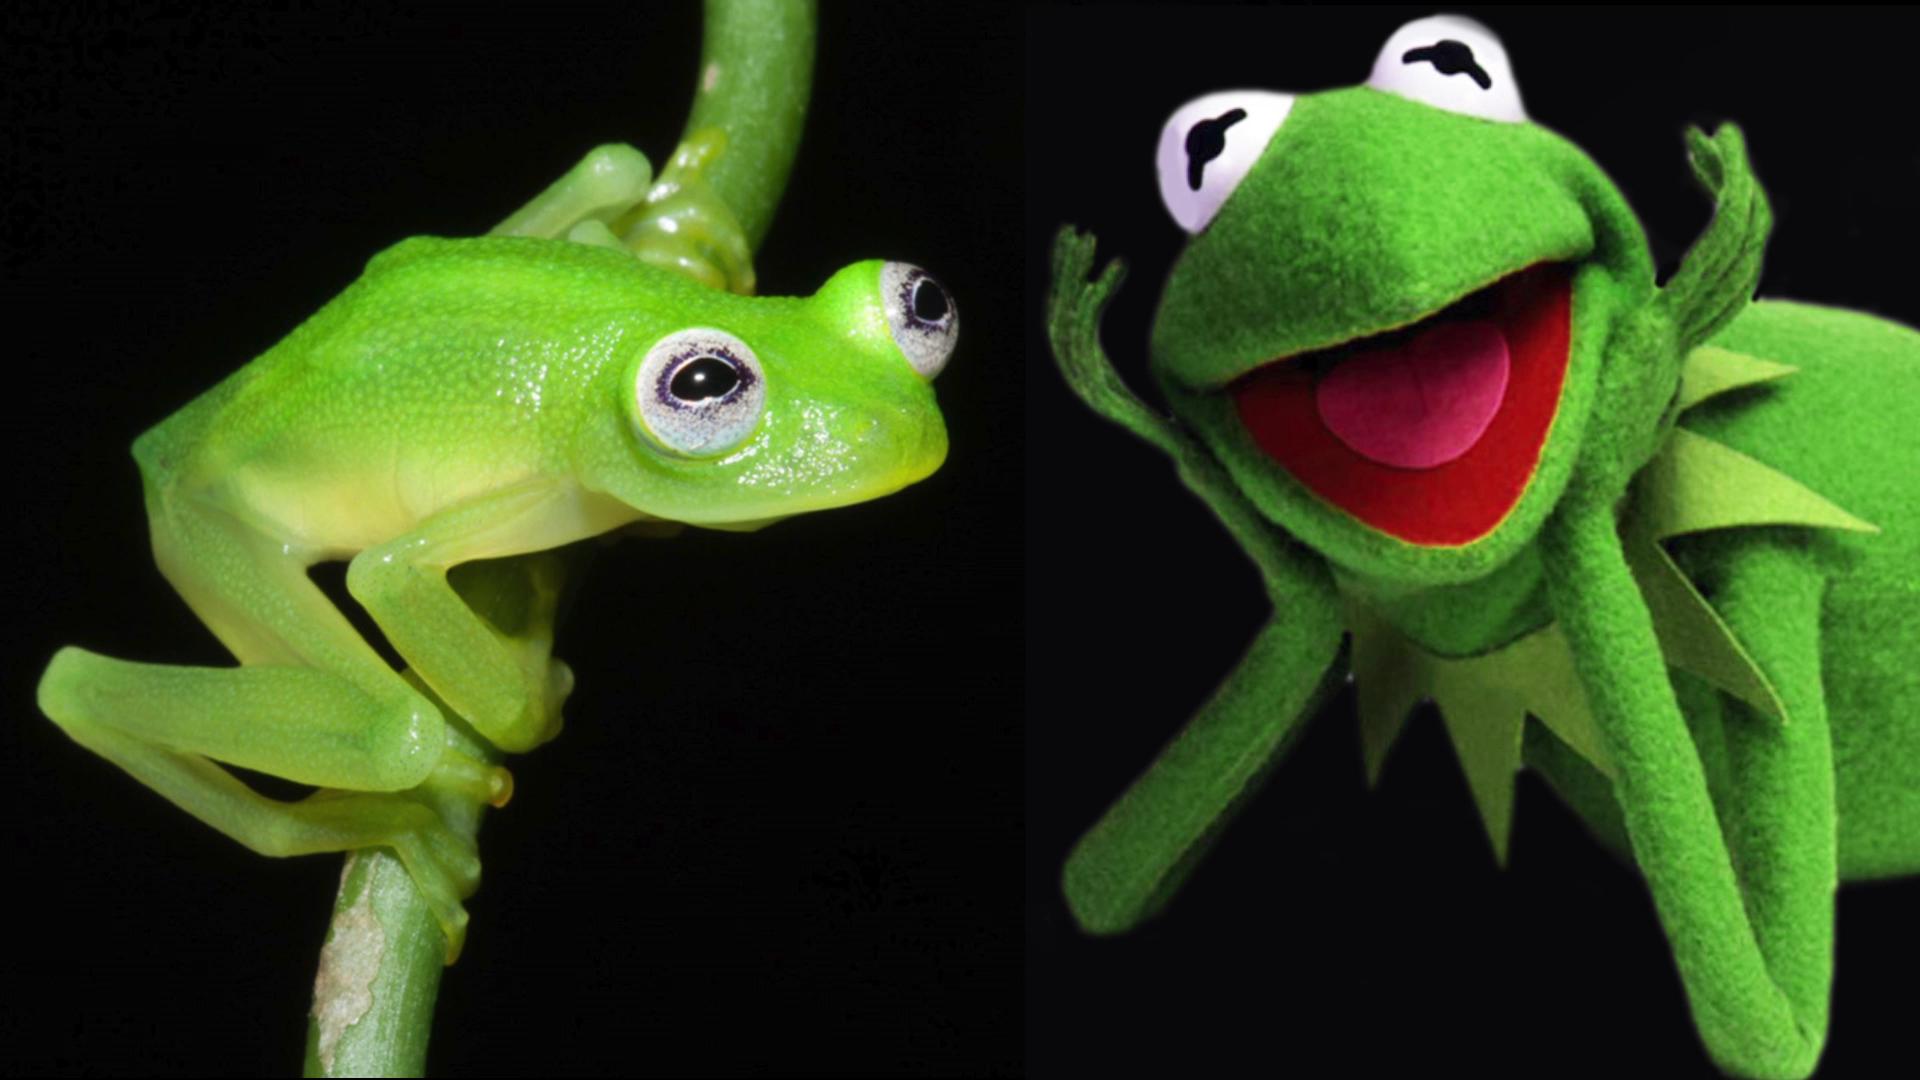 Kermit? New species of glass frog found